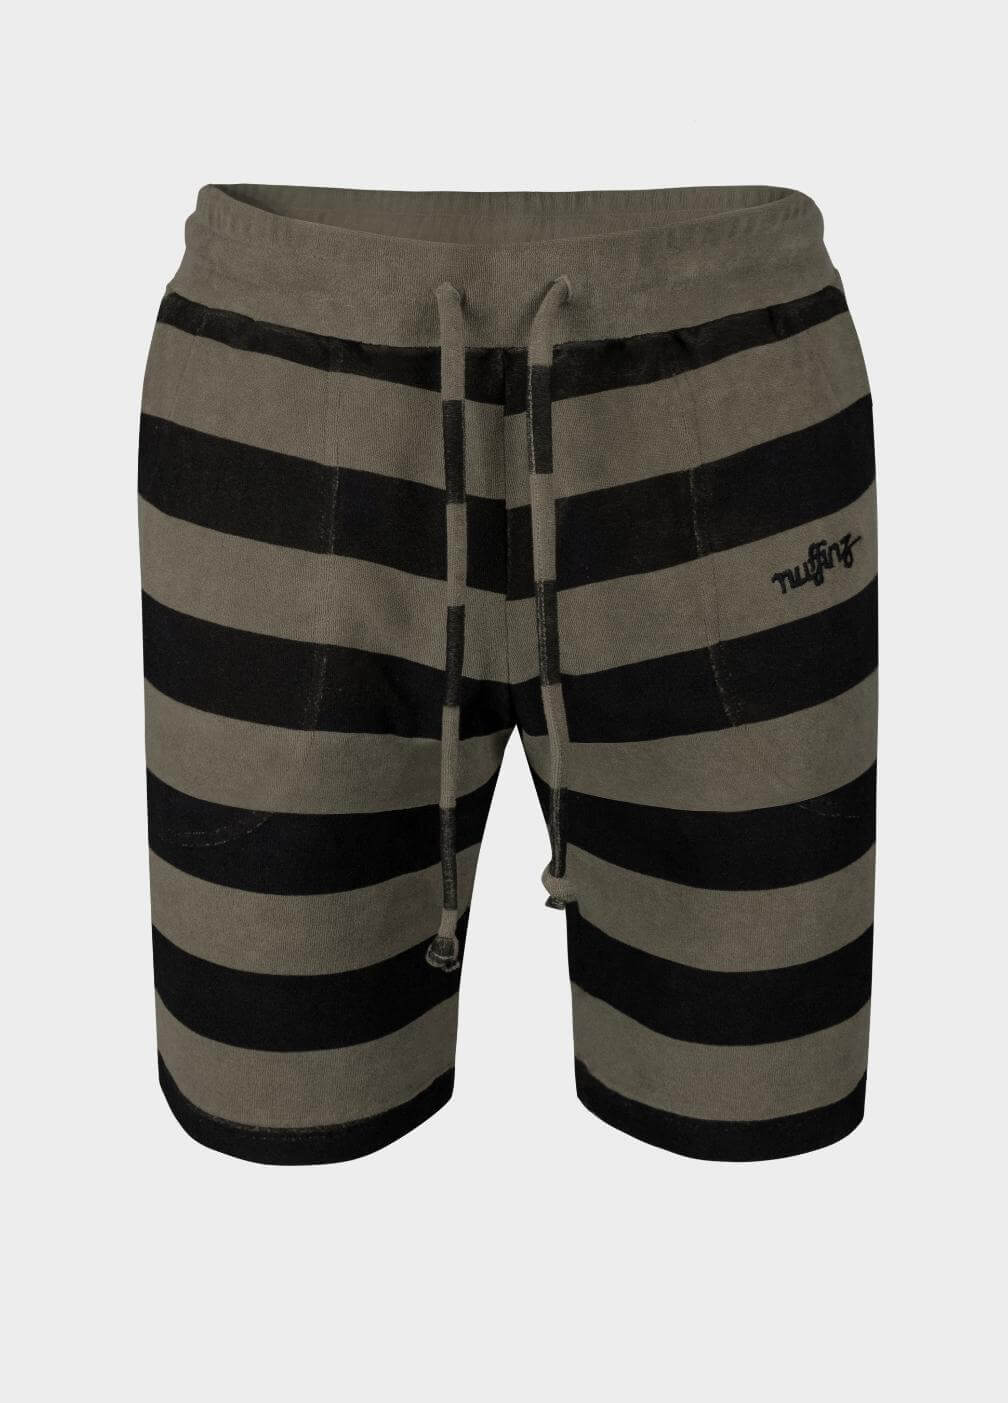 nuffinz menswear - shorts - smokey olive towel shorts st - 100% organic cotton - terry cloth - olive grey striped